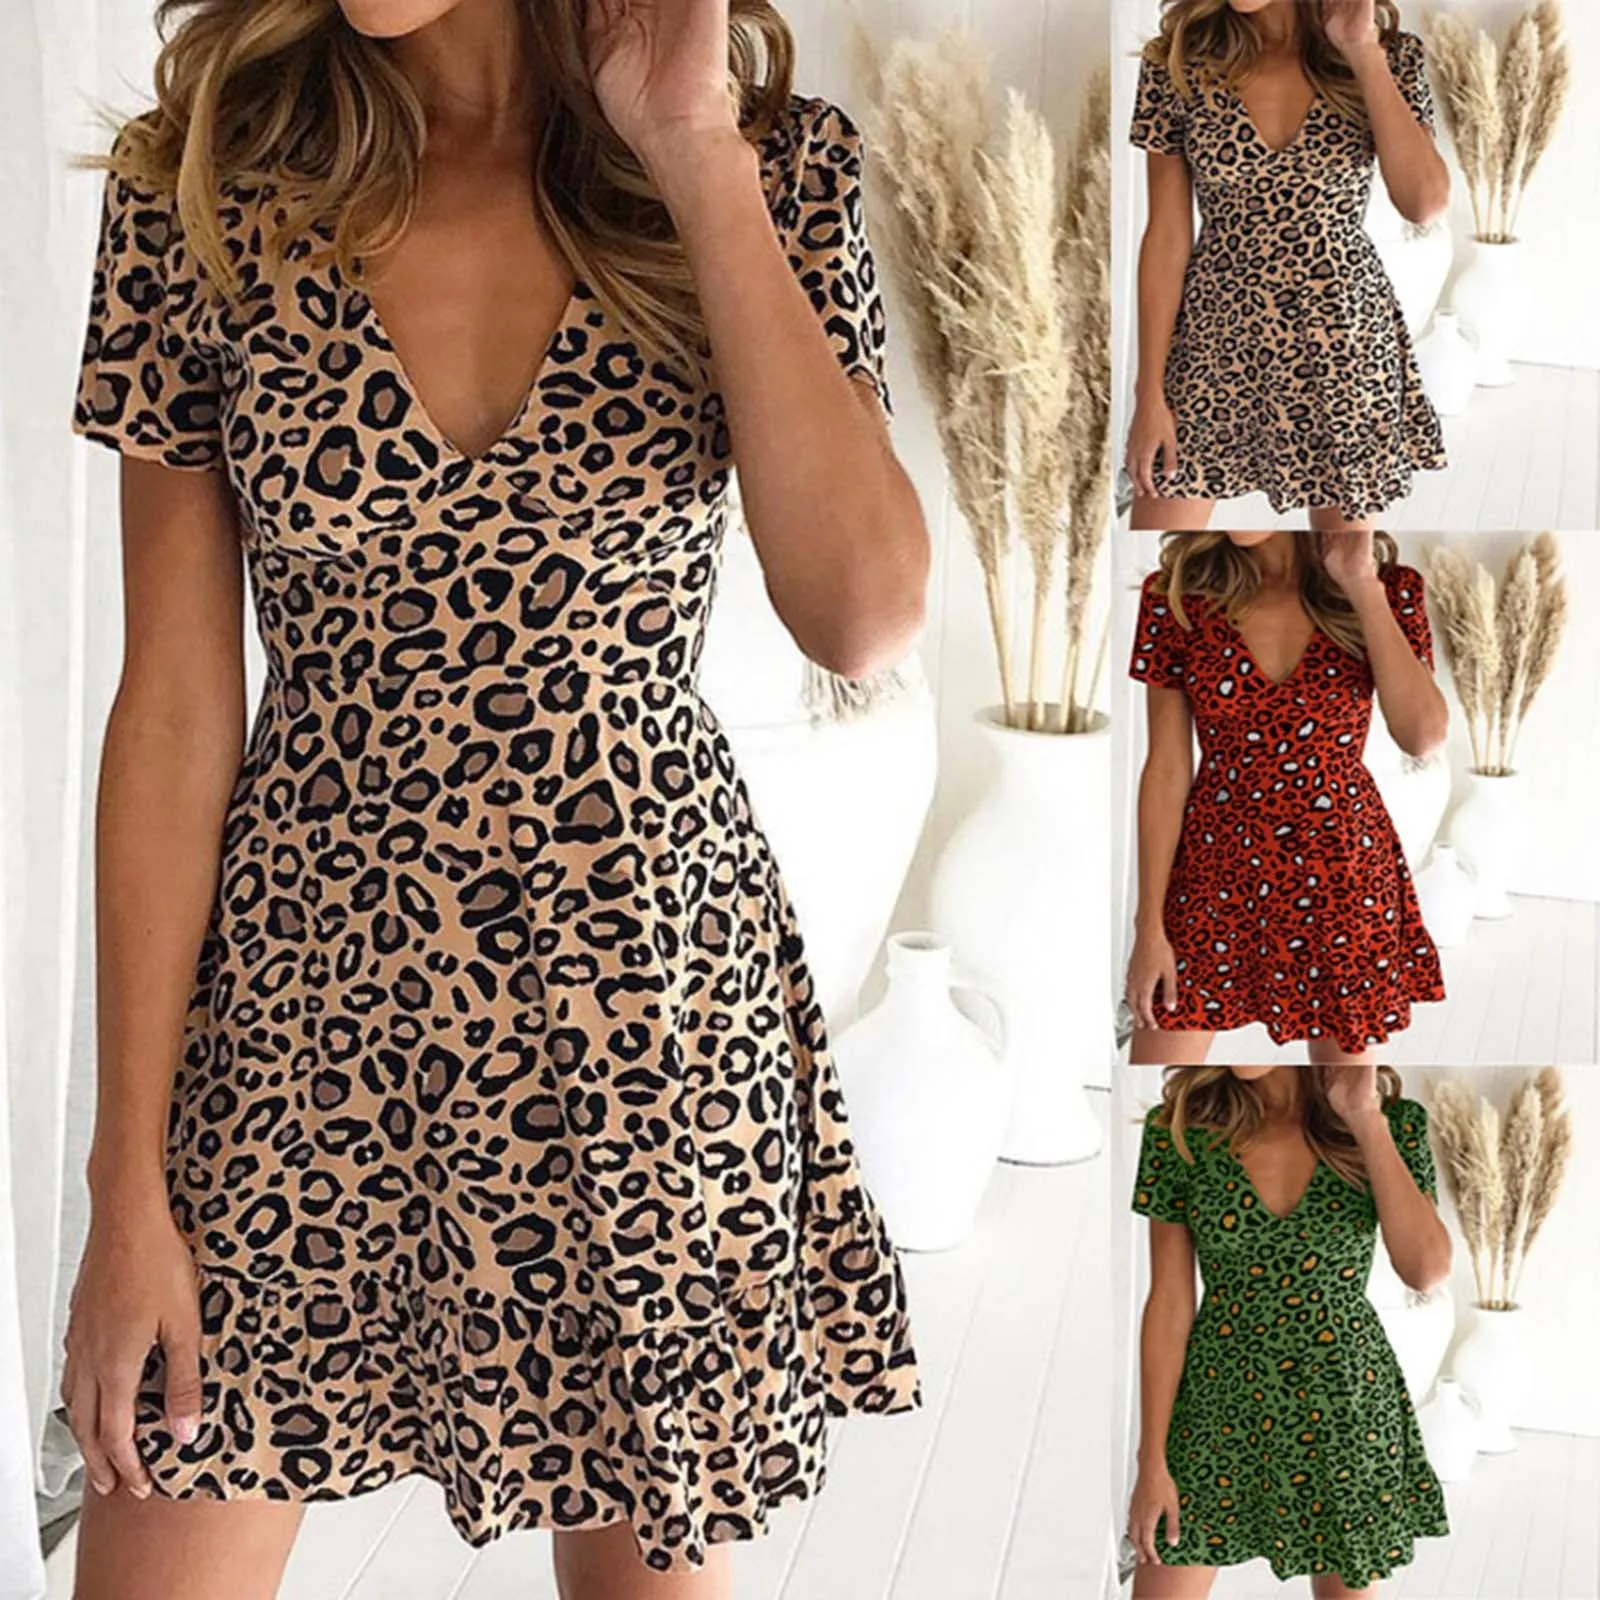 New Women's Summer Dress 2021 V-Neck Printing Leopard Loose Casual Fashion Short Sleeve Mini Dress платье женское летнее 1